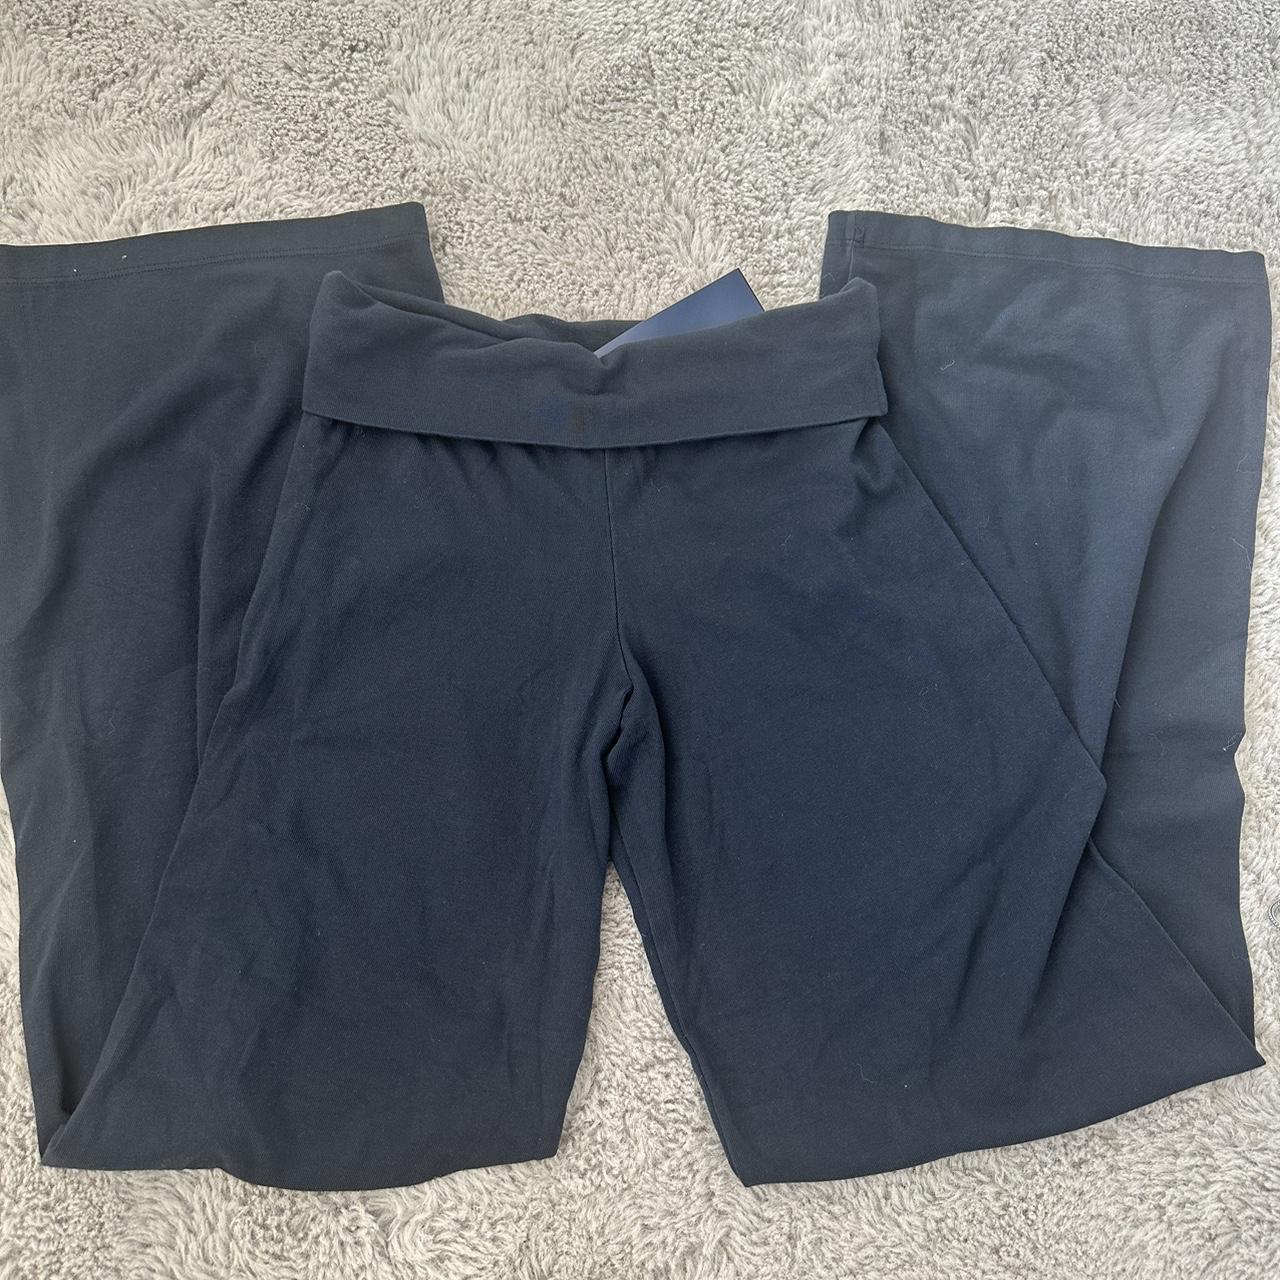 Brandy Melville Women's Navy Trousers